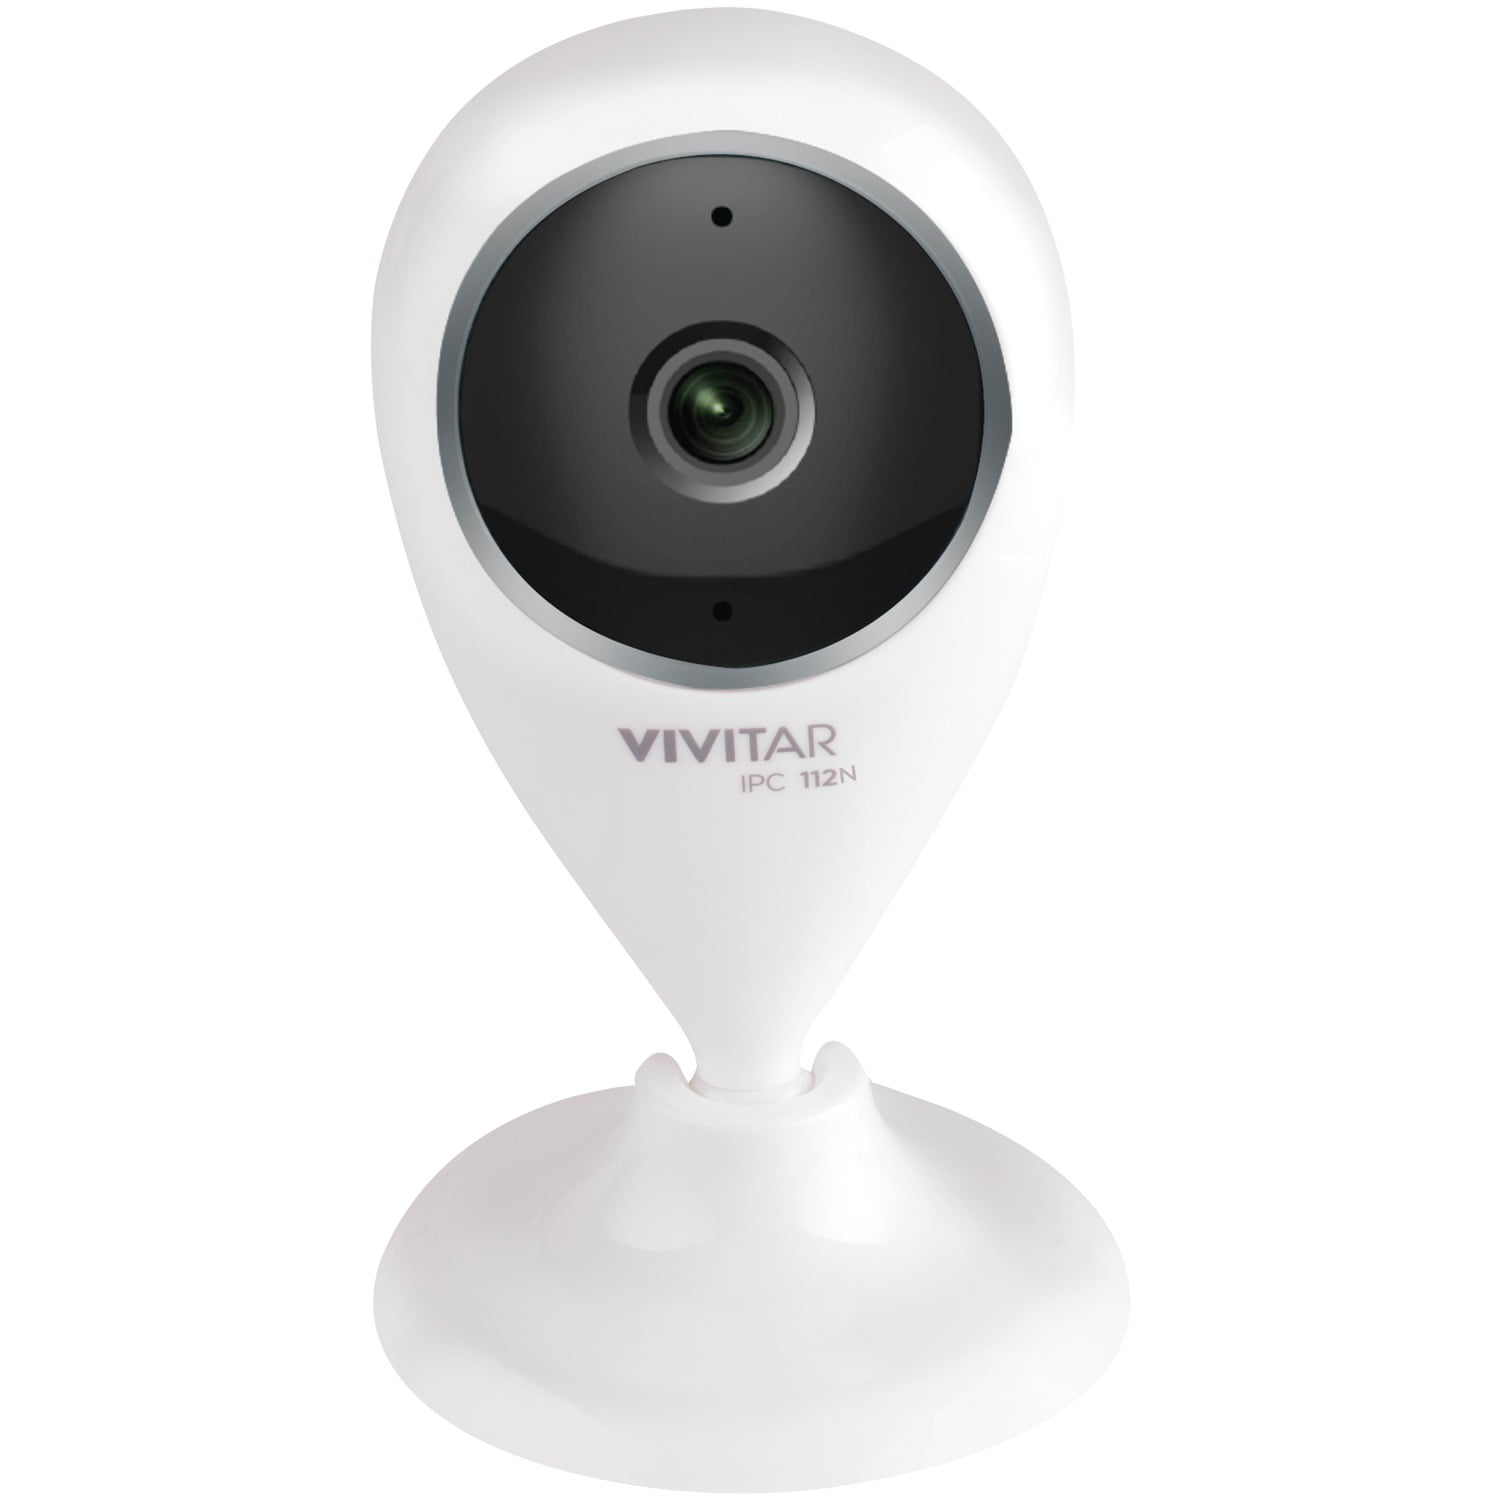 vivitar smart home security app for pc